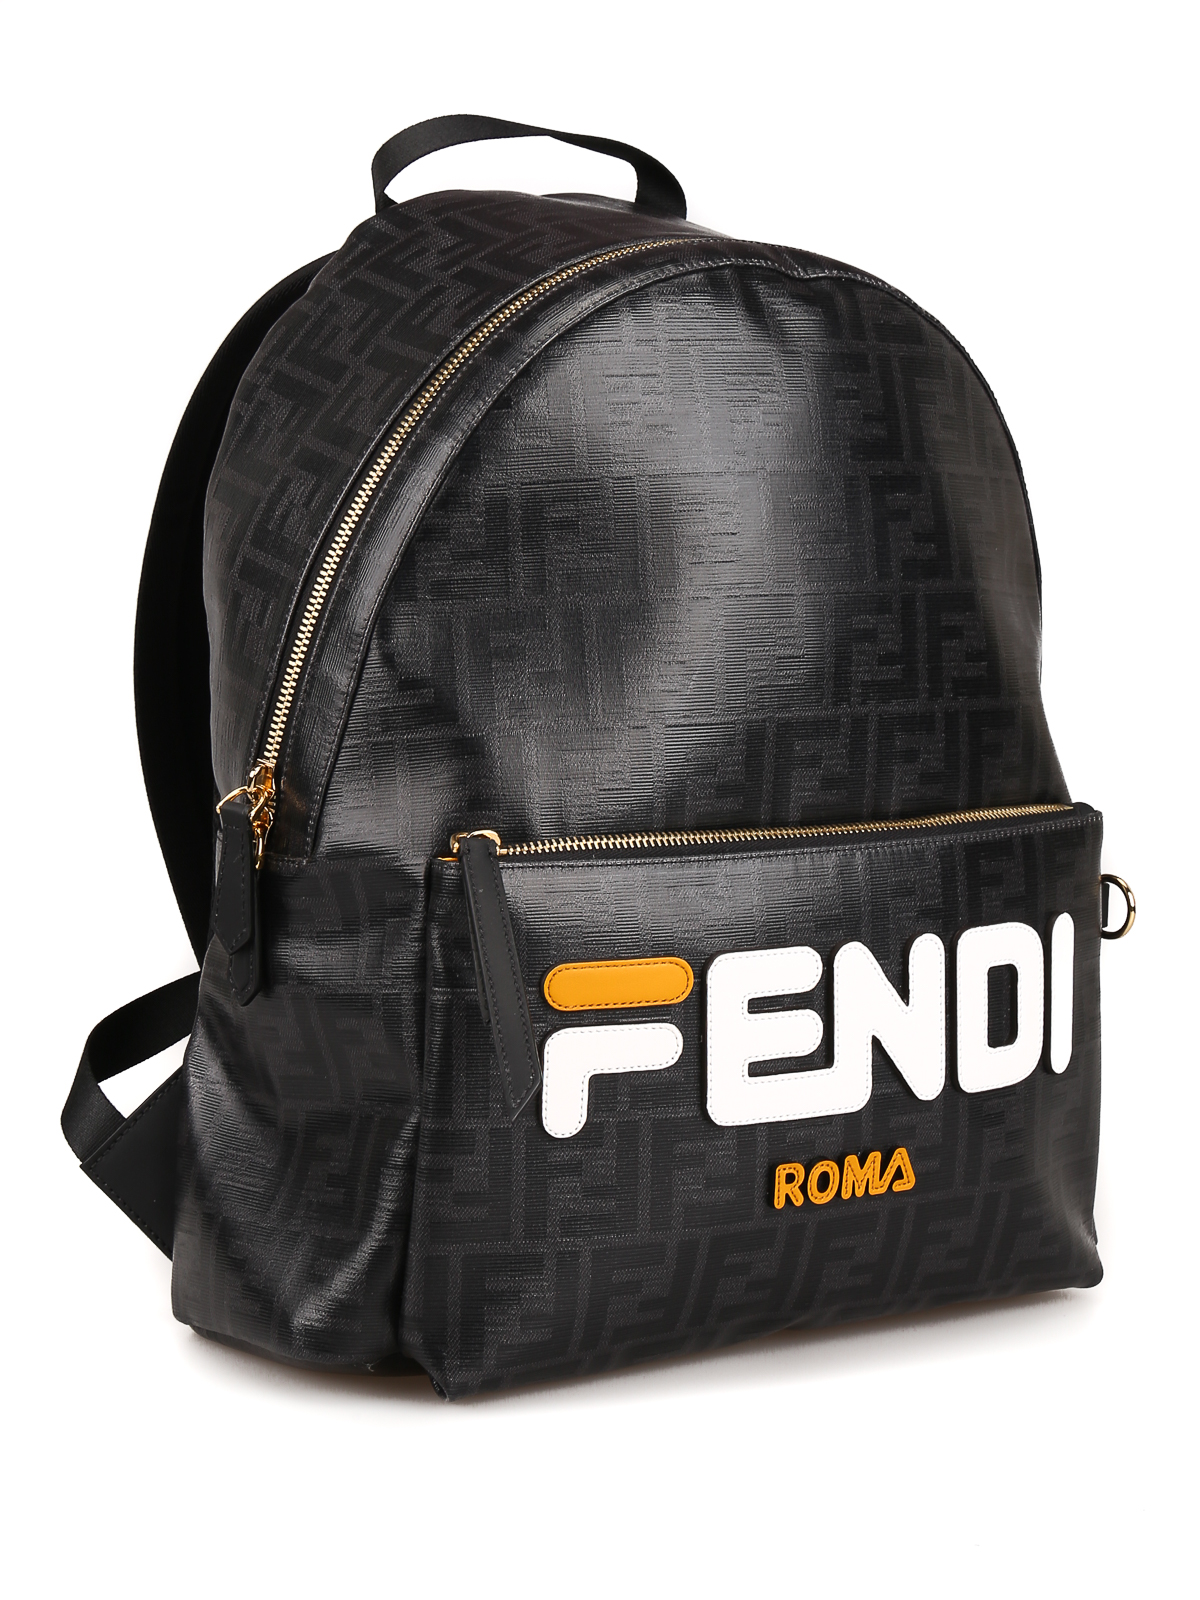 Fendi Mania black canvas backpack 